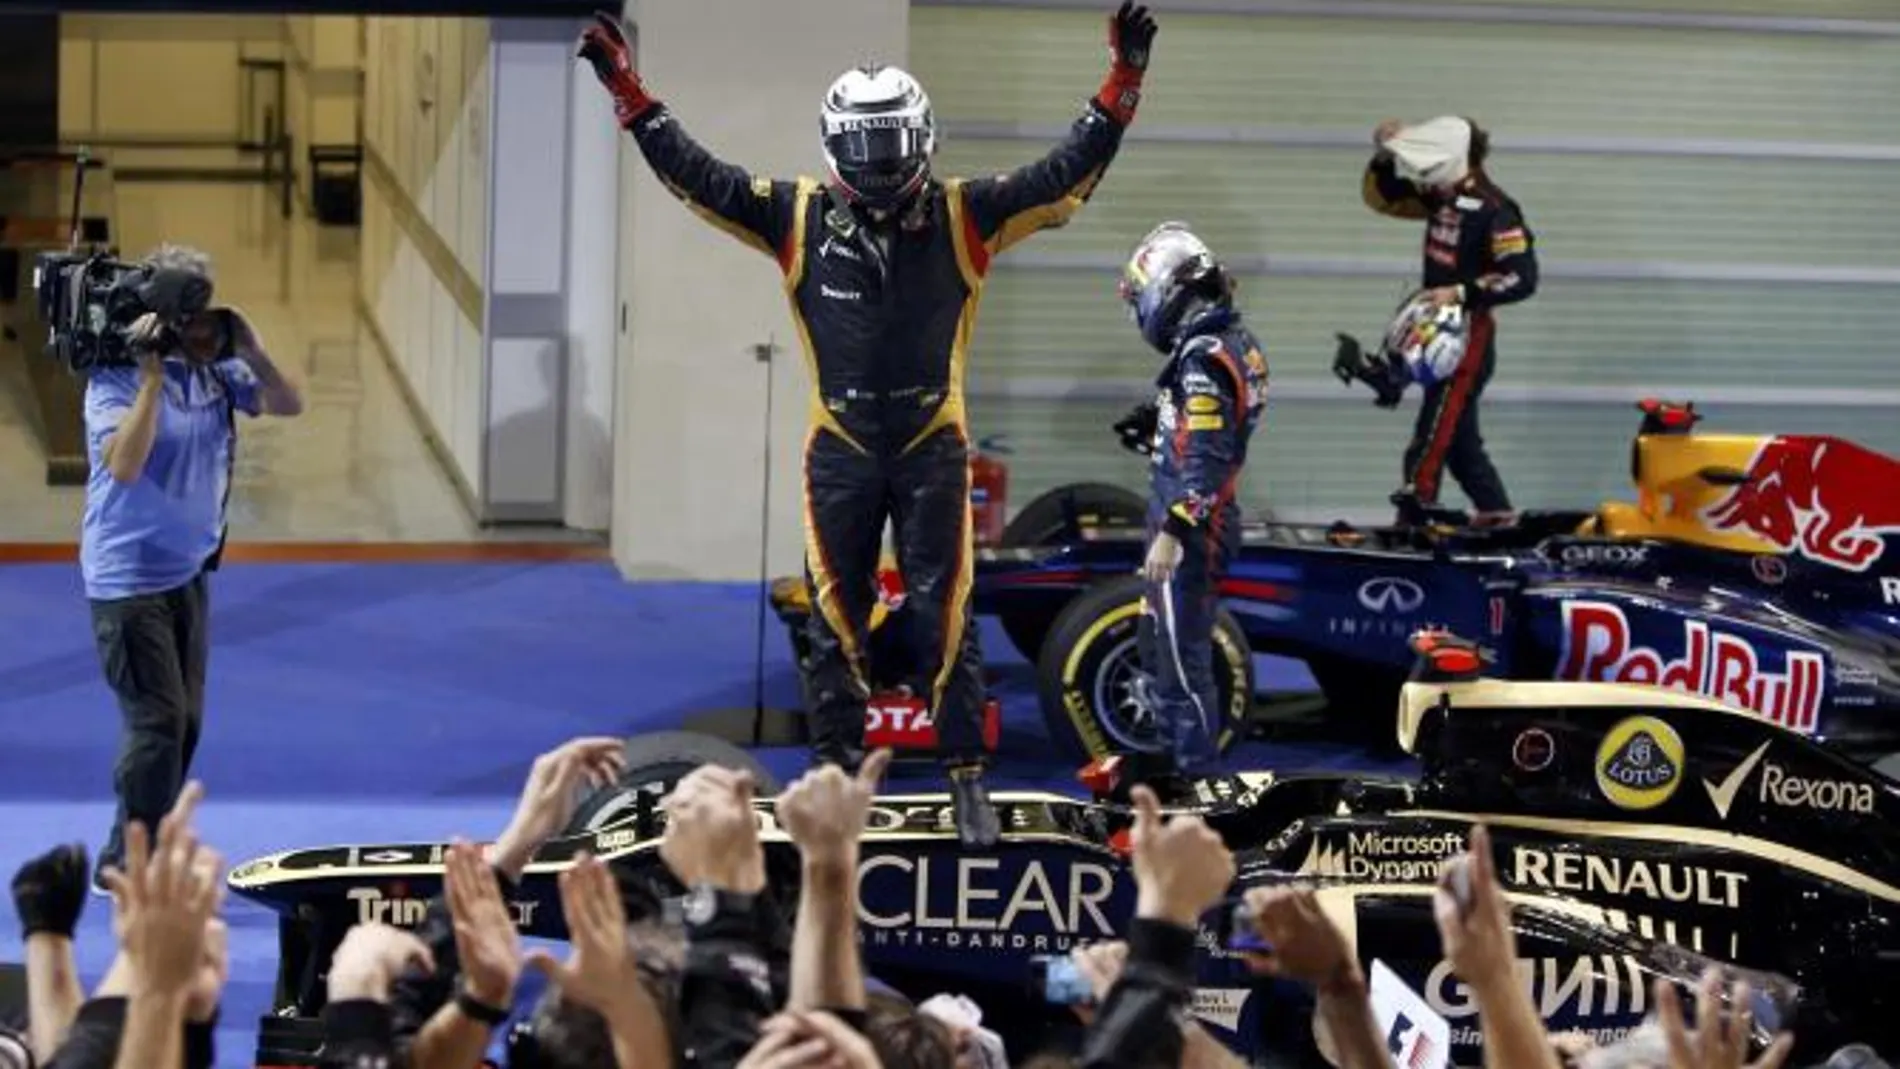 Kimi Raikonen ha sido el ganador del Gran Premio de Abu Dhabi